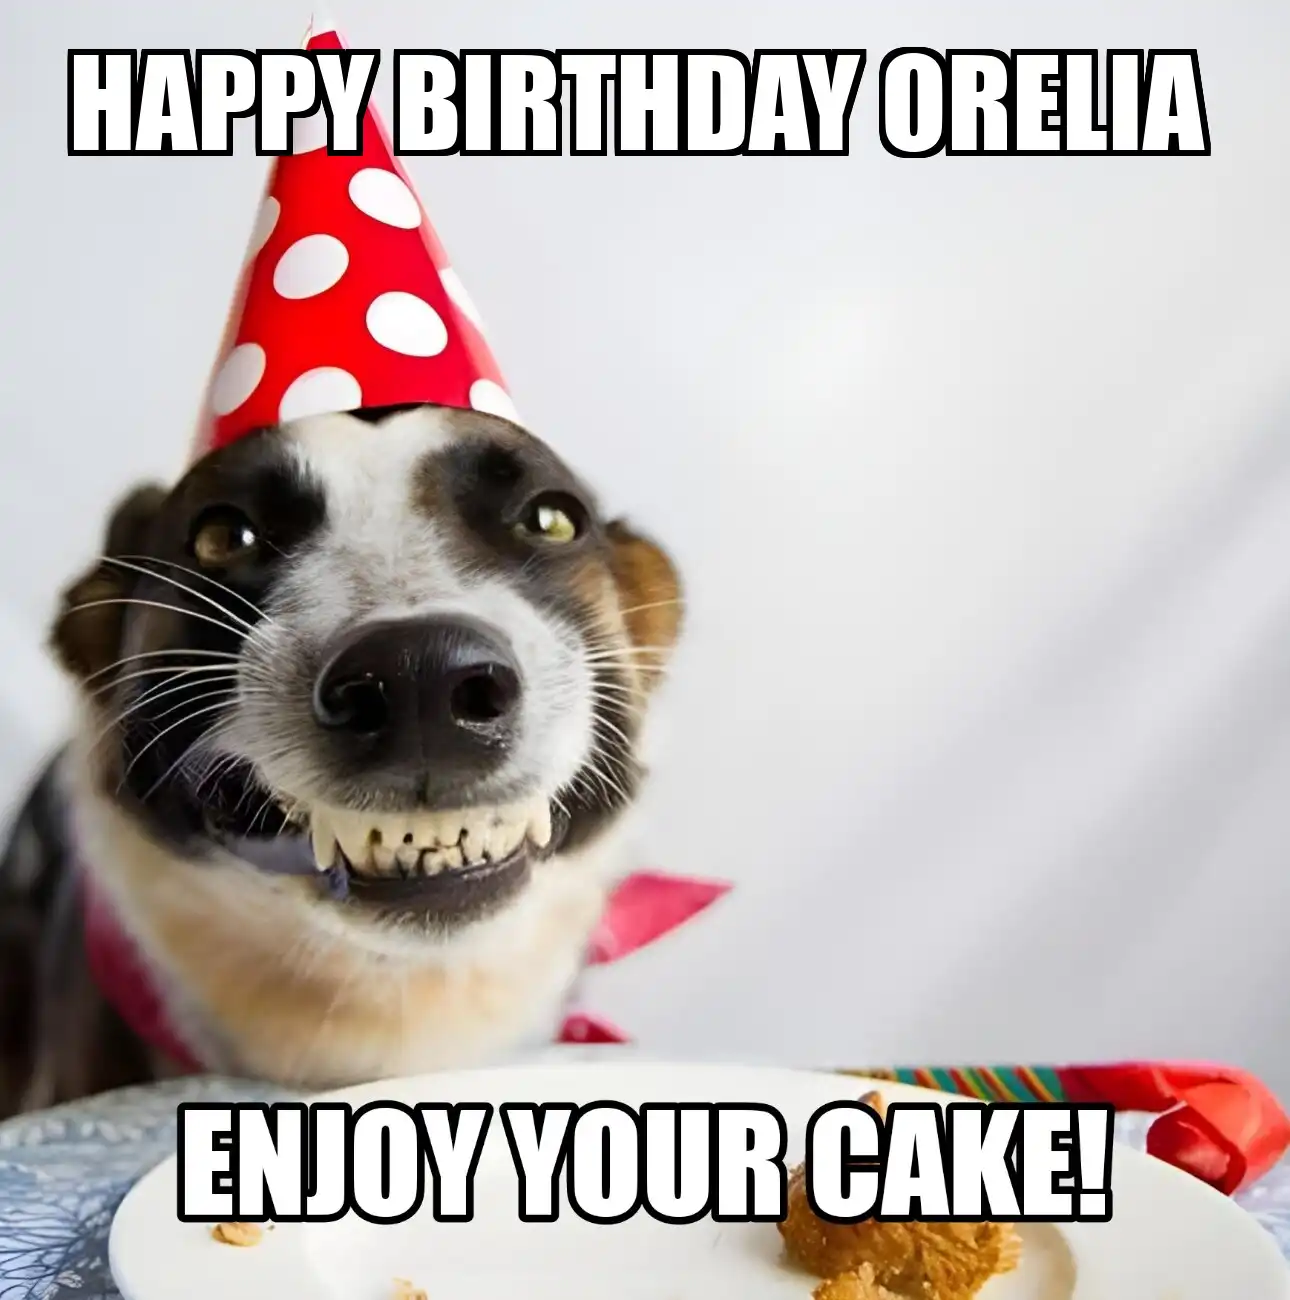 Happy Birthday Orelia Enjoy Your Cake Dog Meme